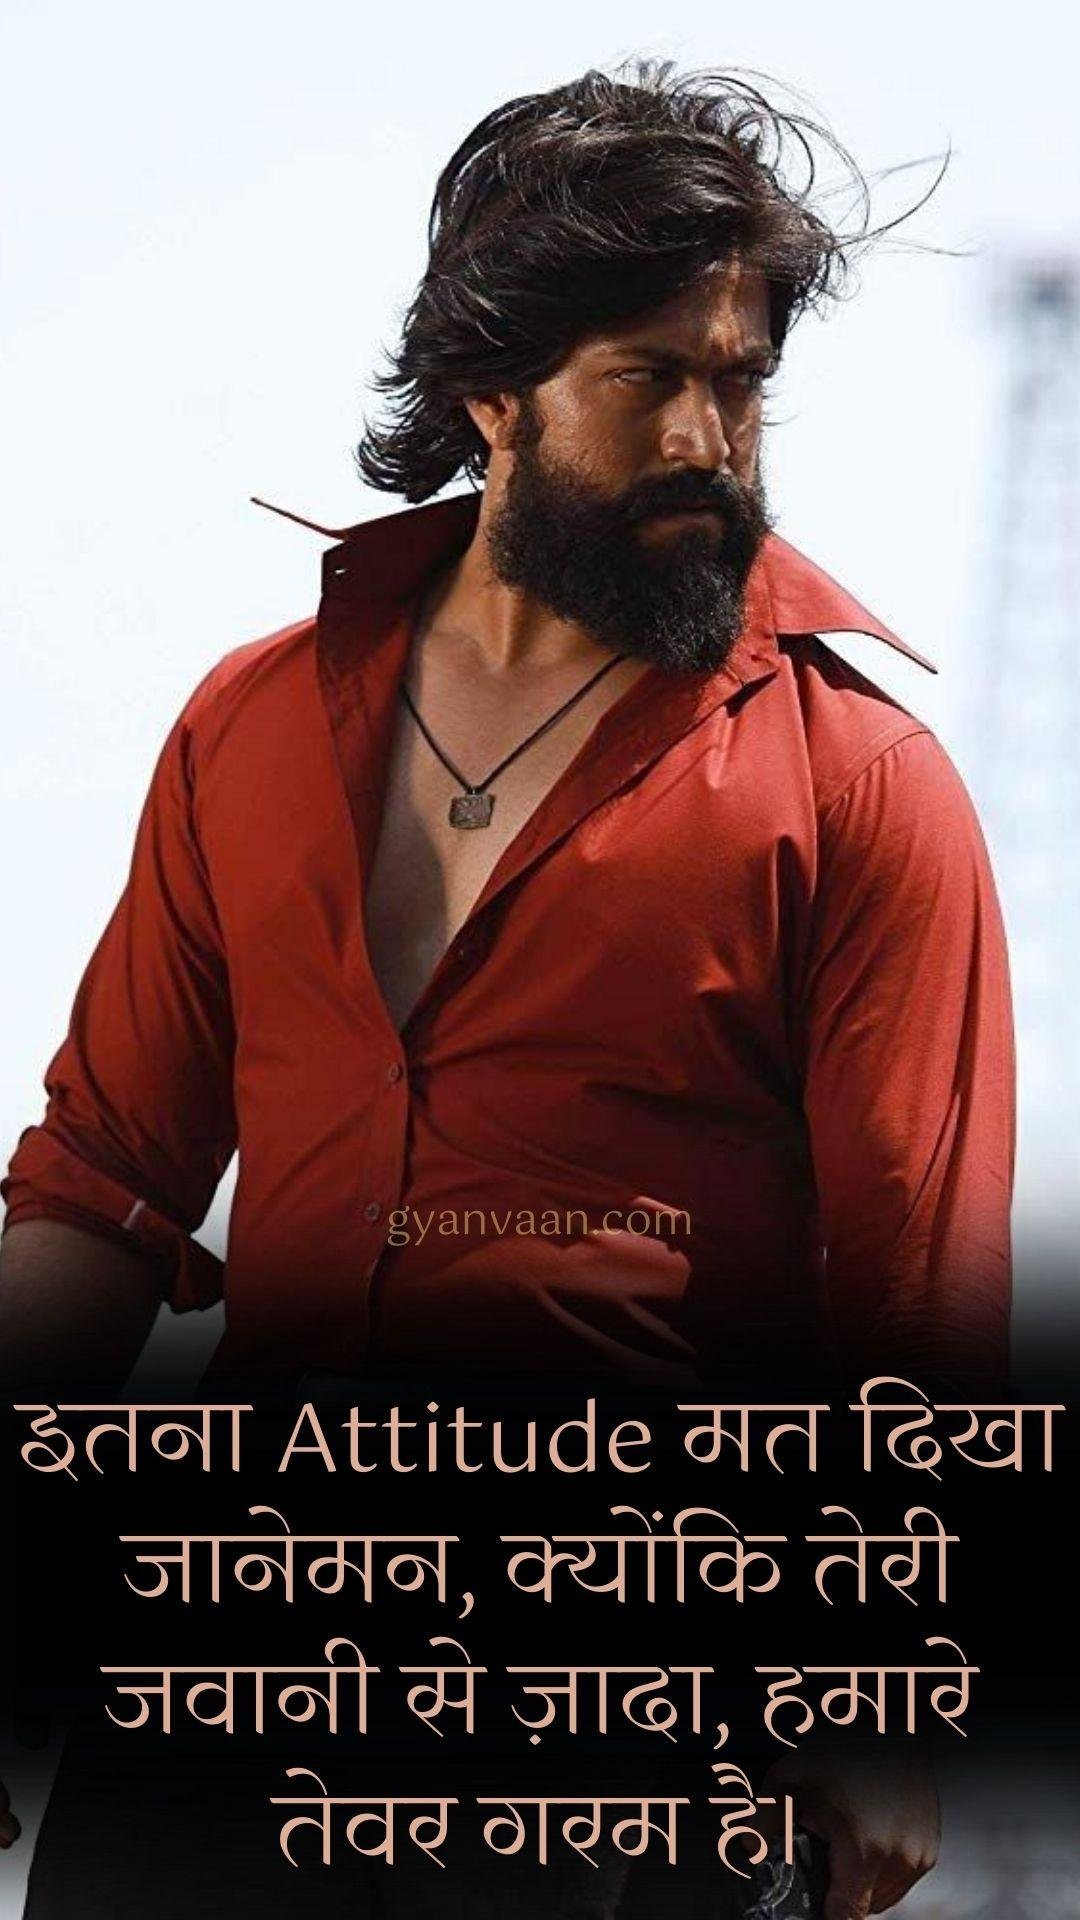 Attitude Images For Mobile 51 - Attitude Shayari